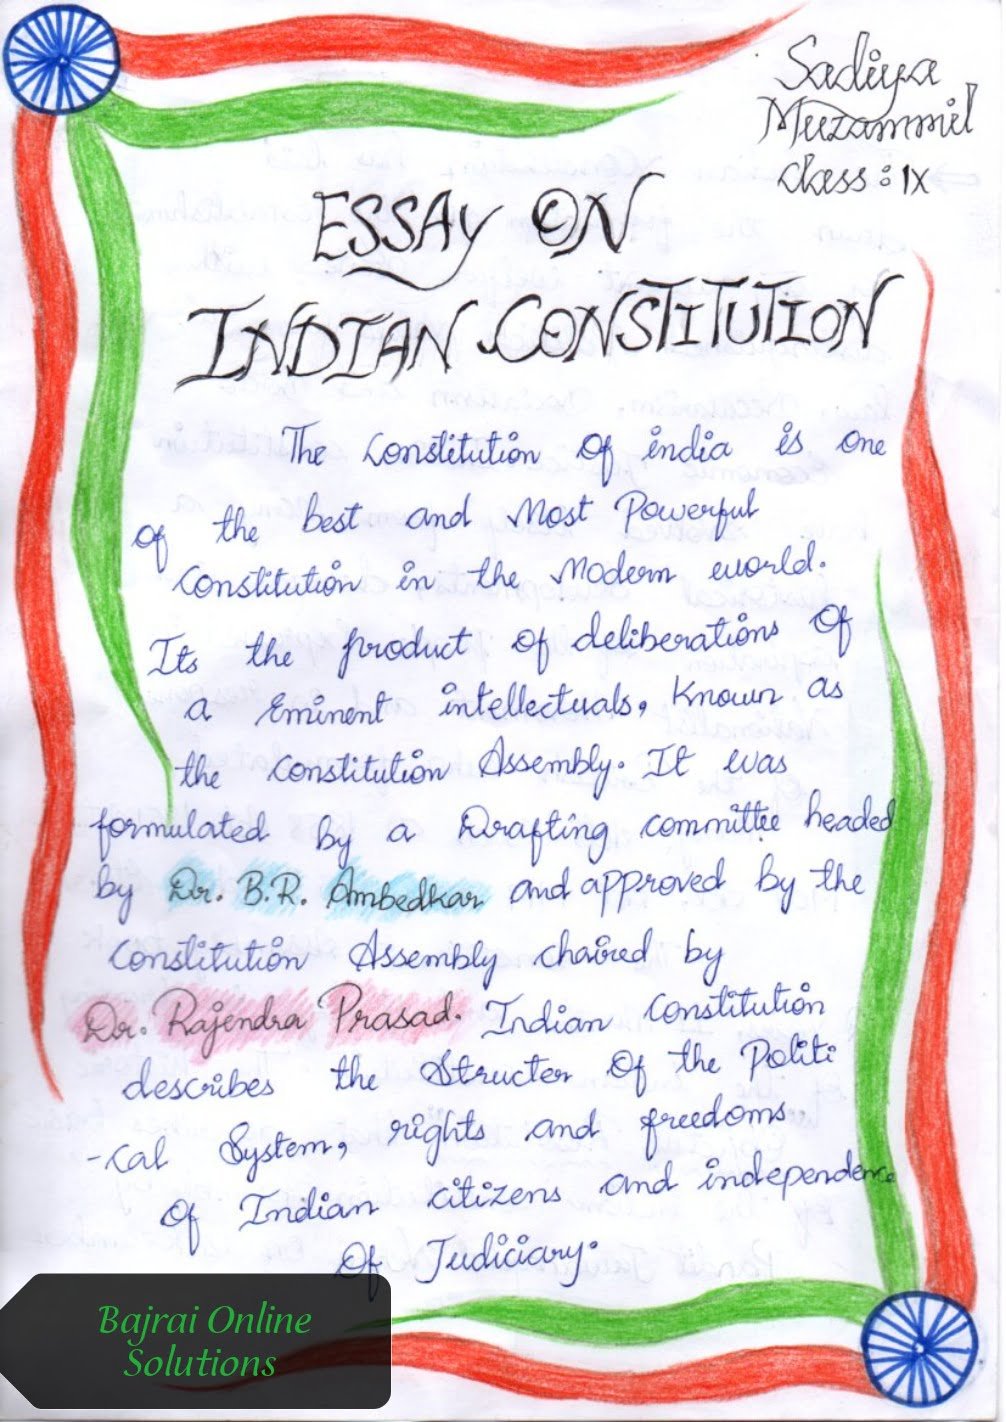 constitution day essay writing in telugu